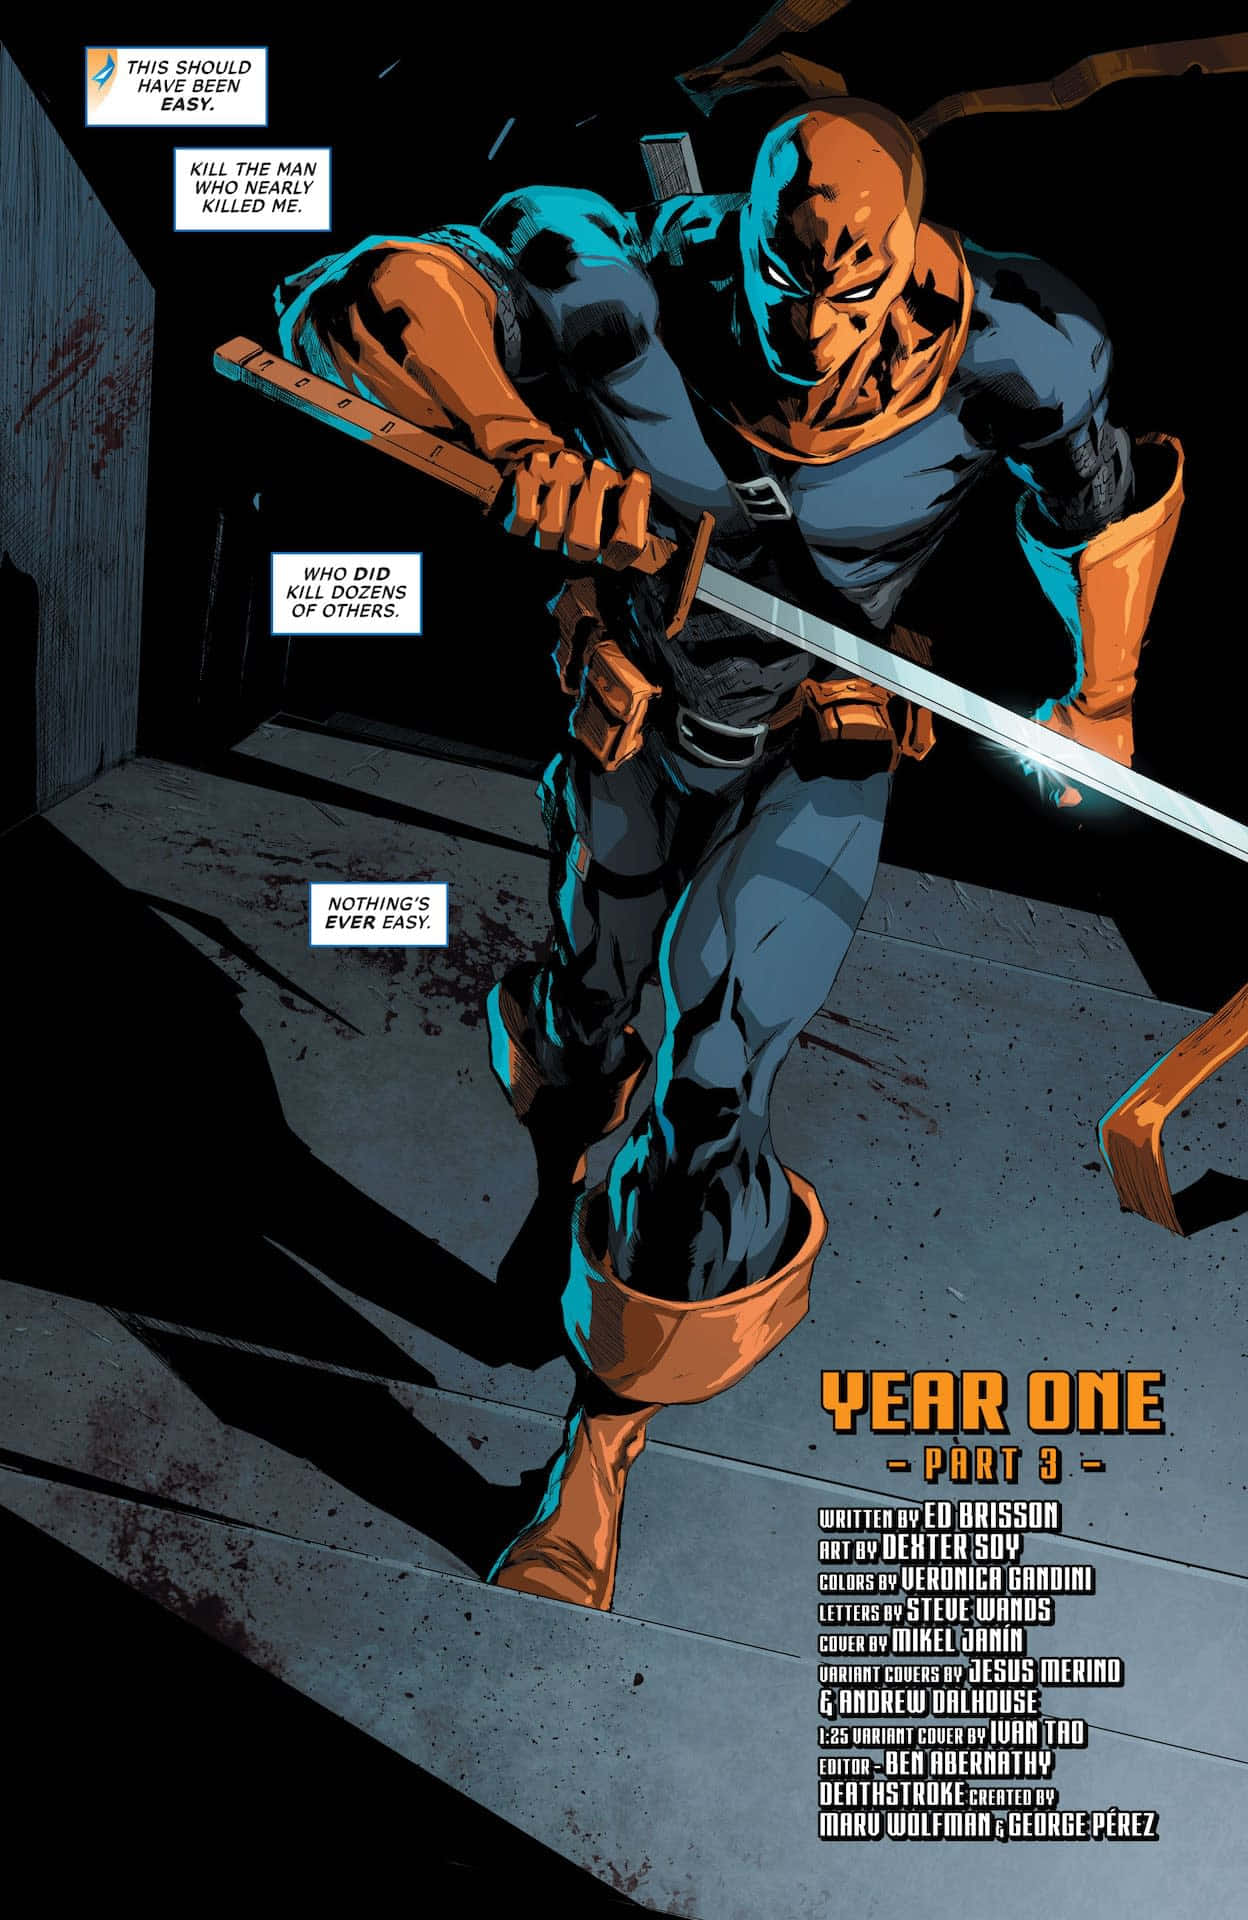 Deathstroke, DC Comics' most dangerous mercenary